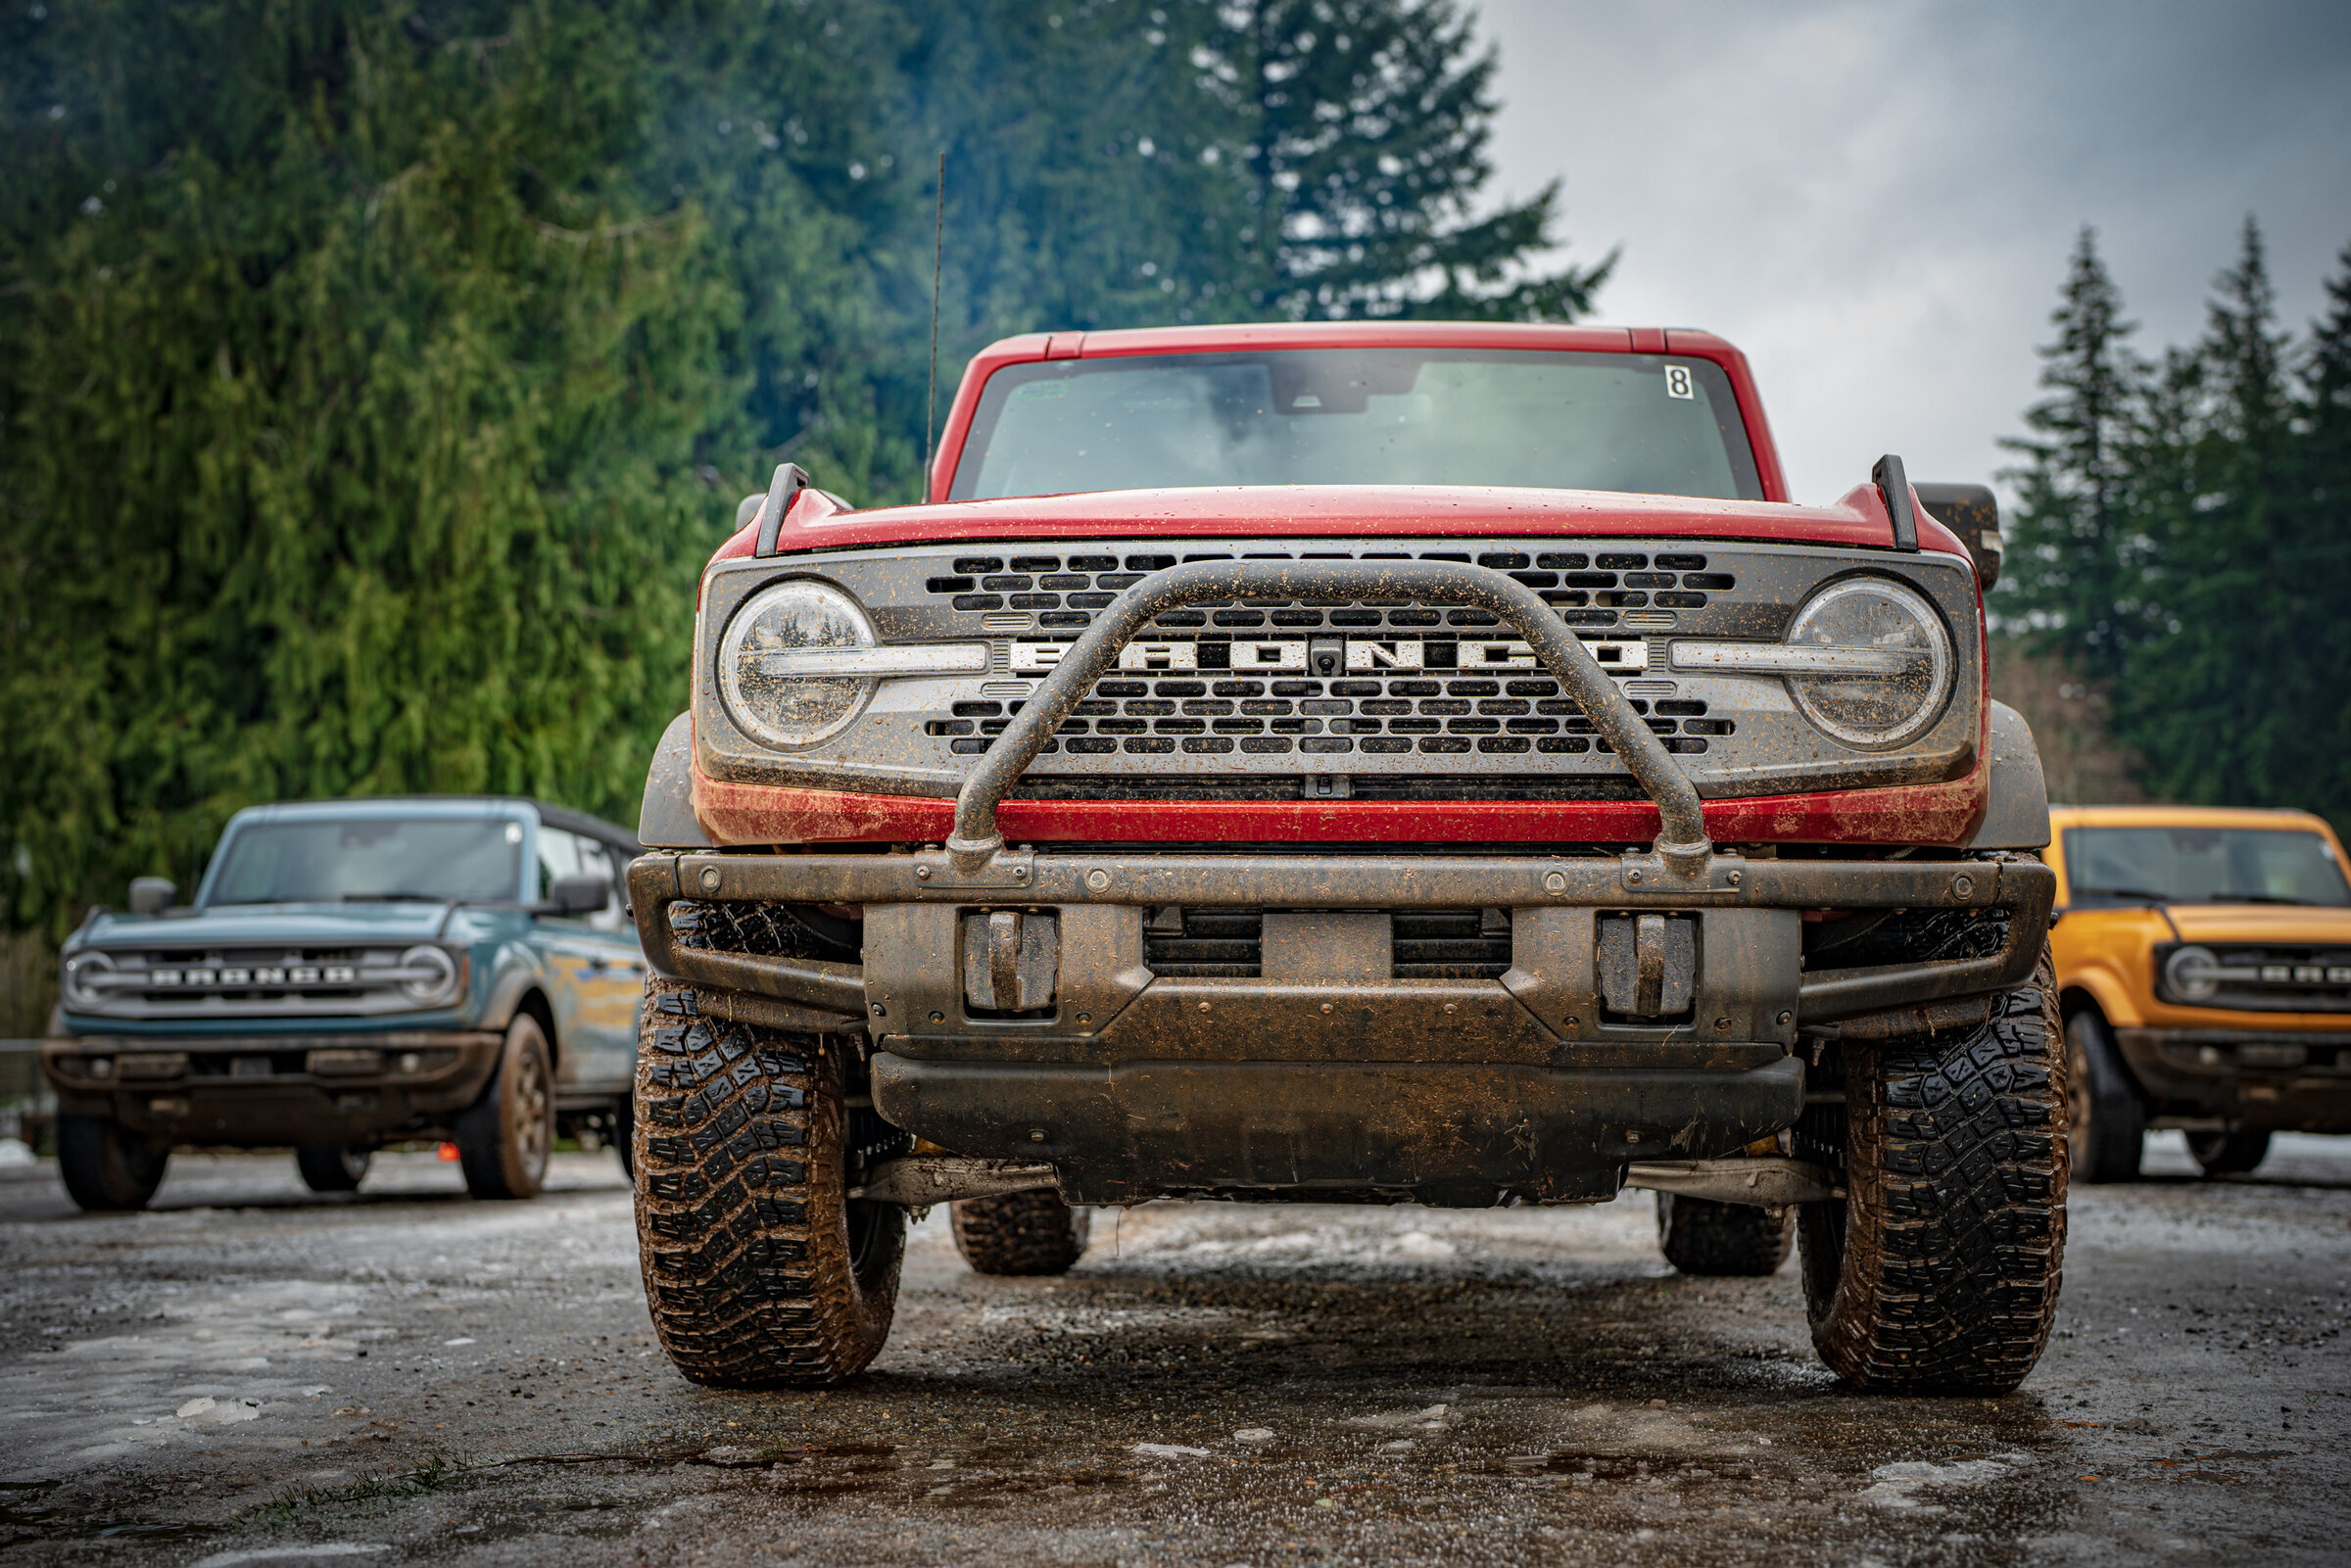 Ford Bronco Ultimate Badlands Non-Sasquatch pics thread masonmarsh-Primary Colors